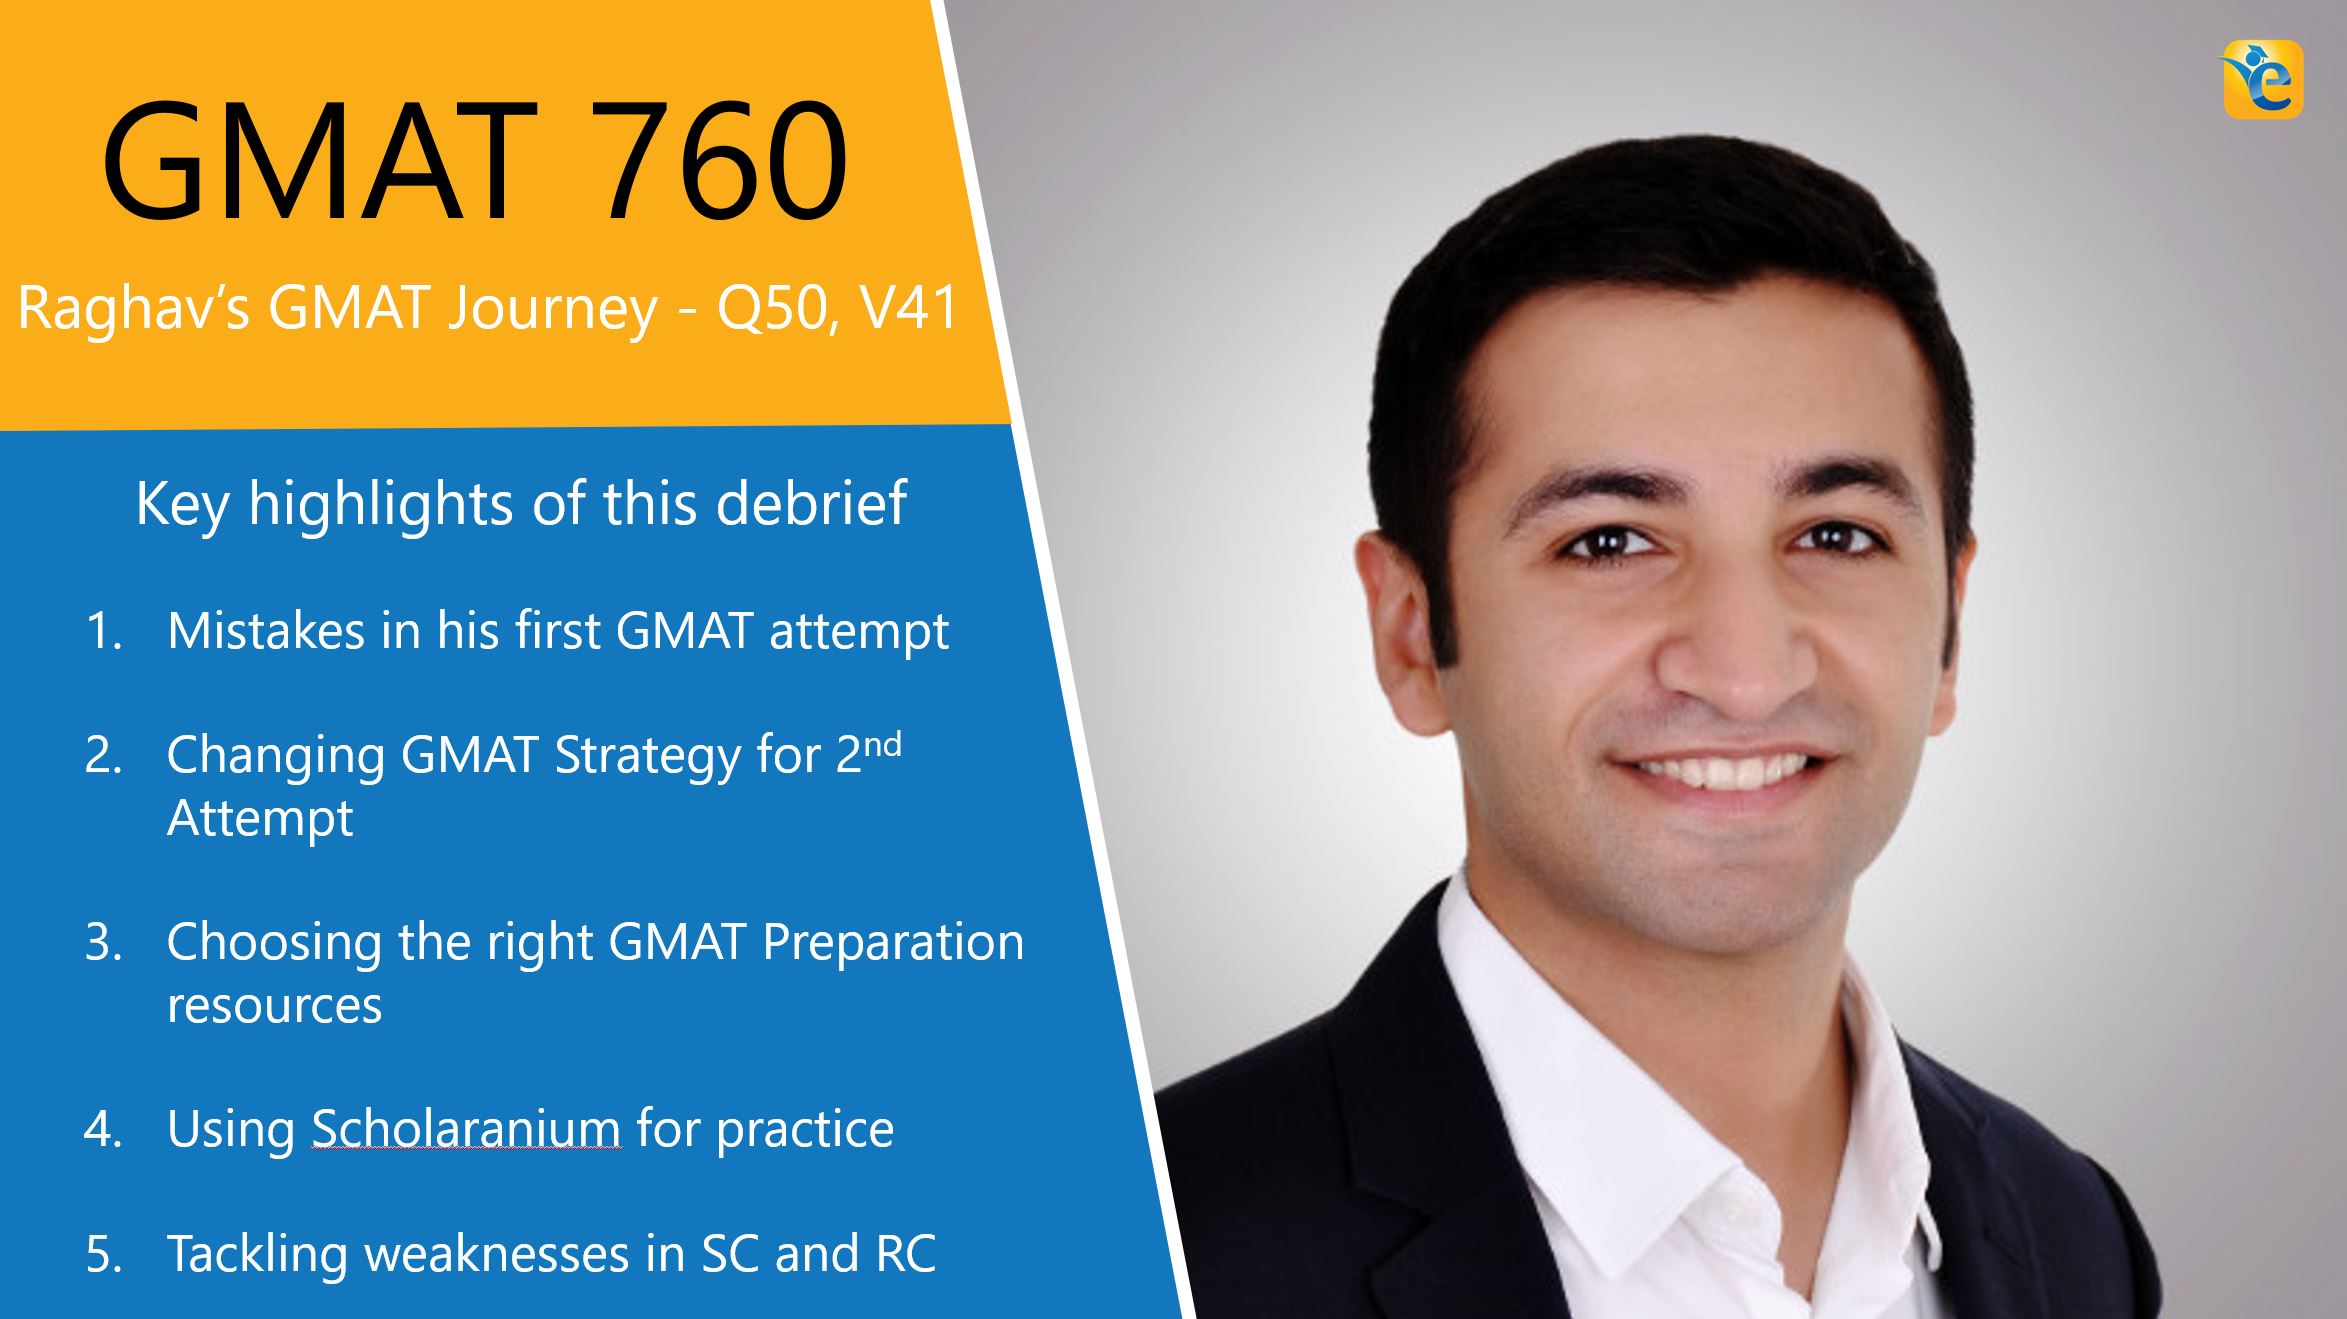 How Raghav Scored a GMAT 760 (Q50 V41) in his 3rd attempt